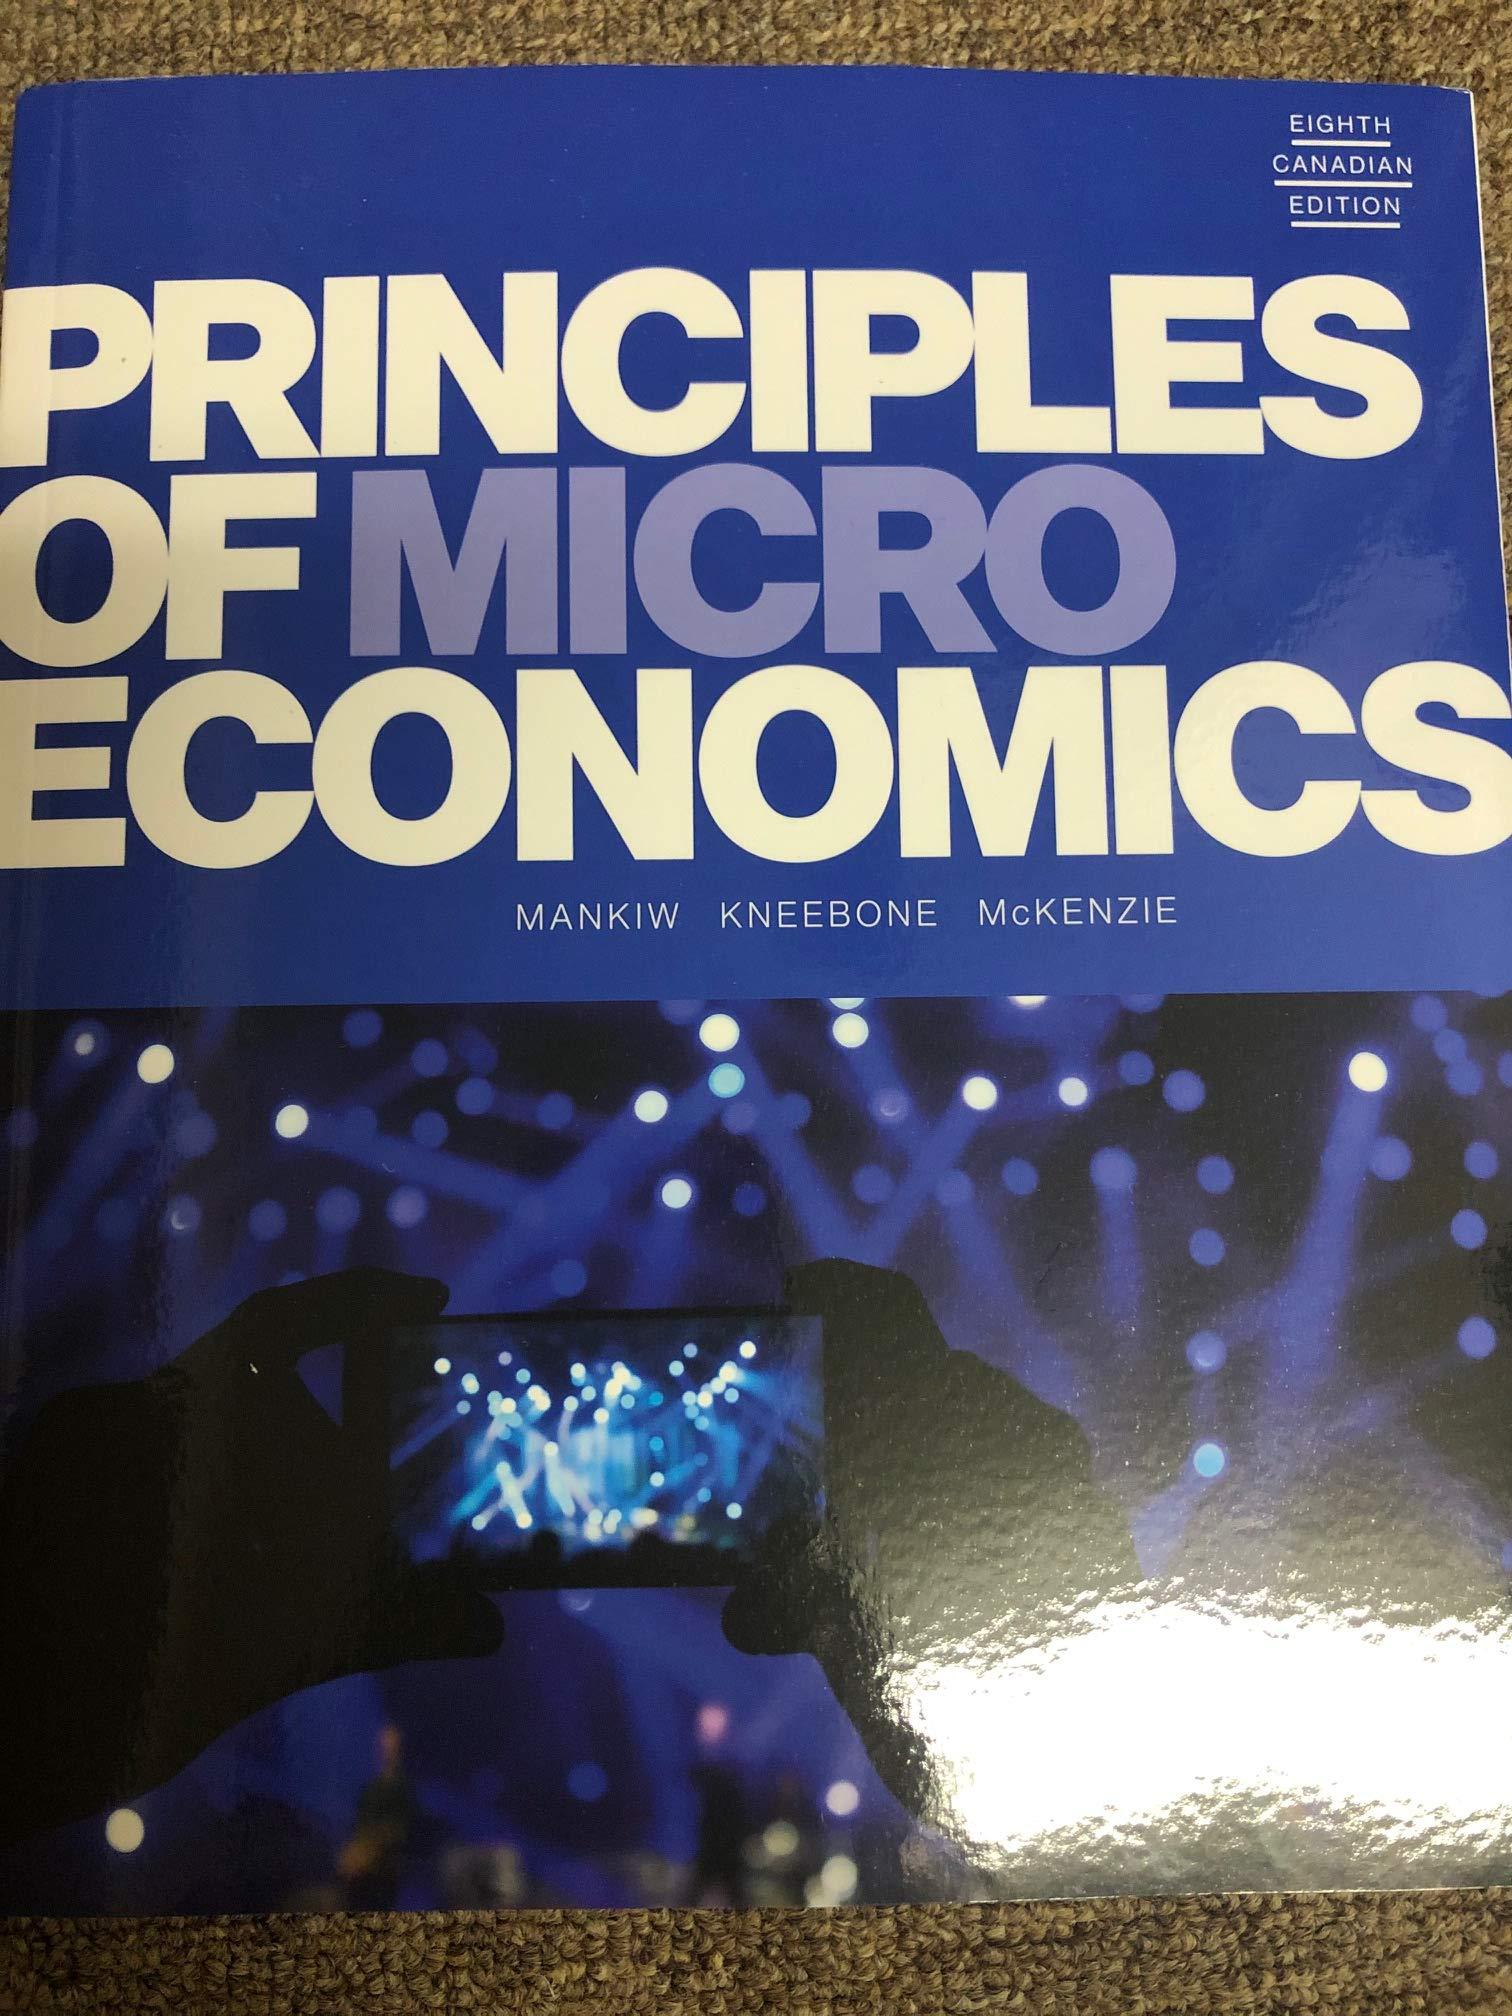 principles of microeconomics 8th canadian edition n. mankiw, ronald kneebone, kenneth mckenzie 0176872825,